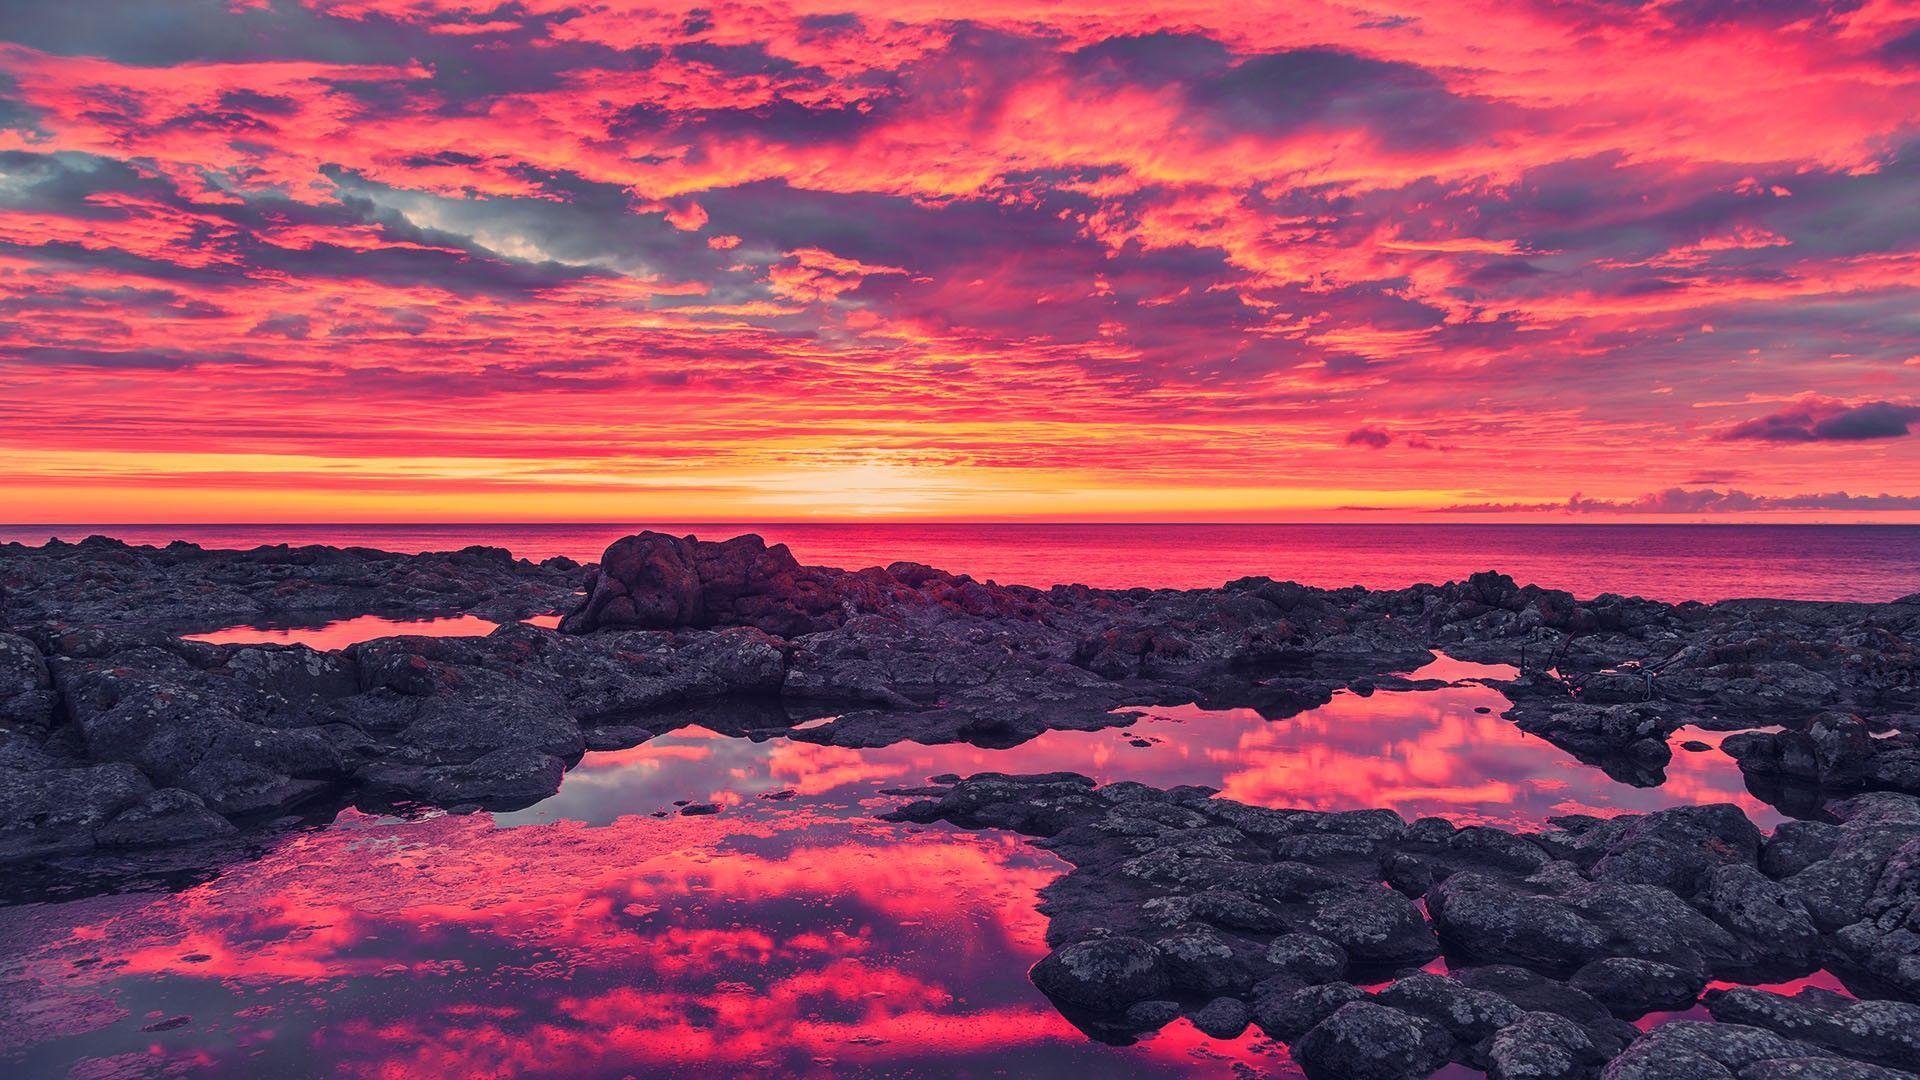 Seascapes oceans seas nature colors sunsets sunrises coastlines